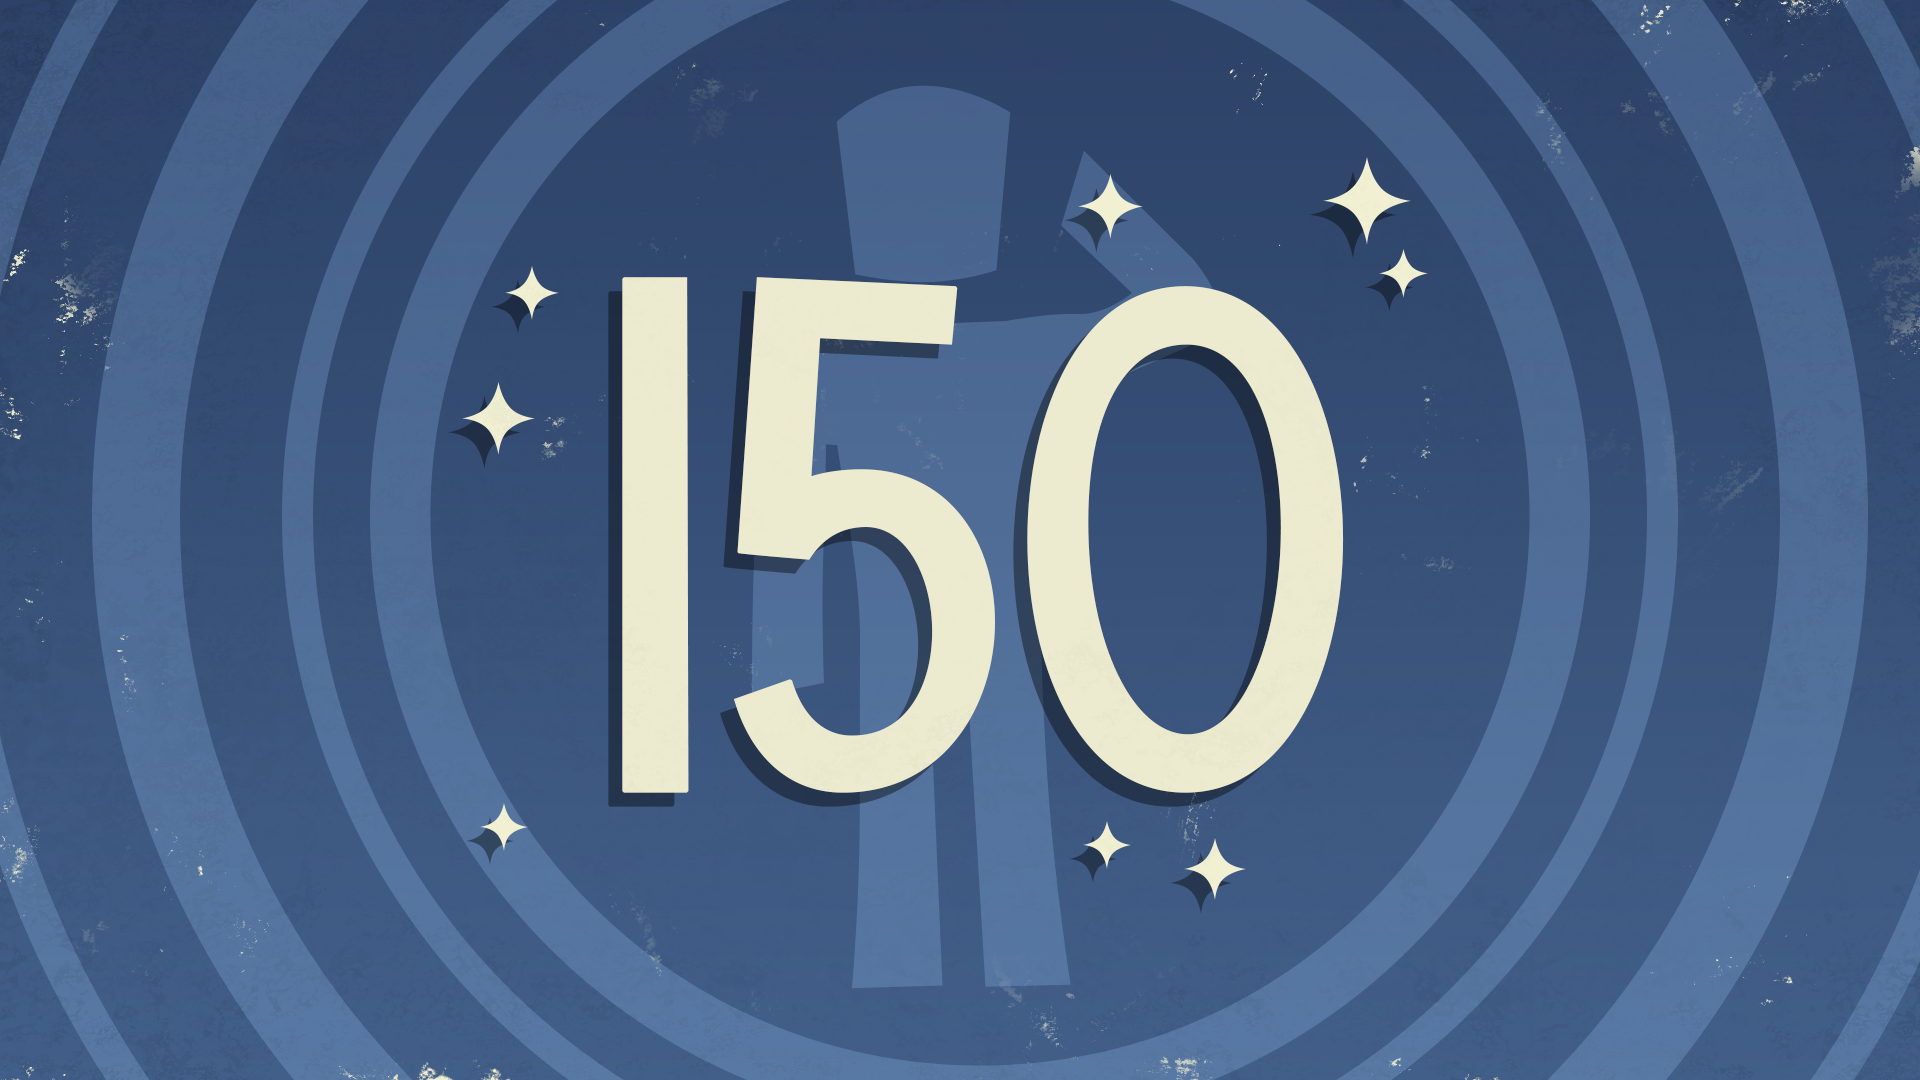 Icon for 150 Minions